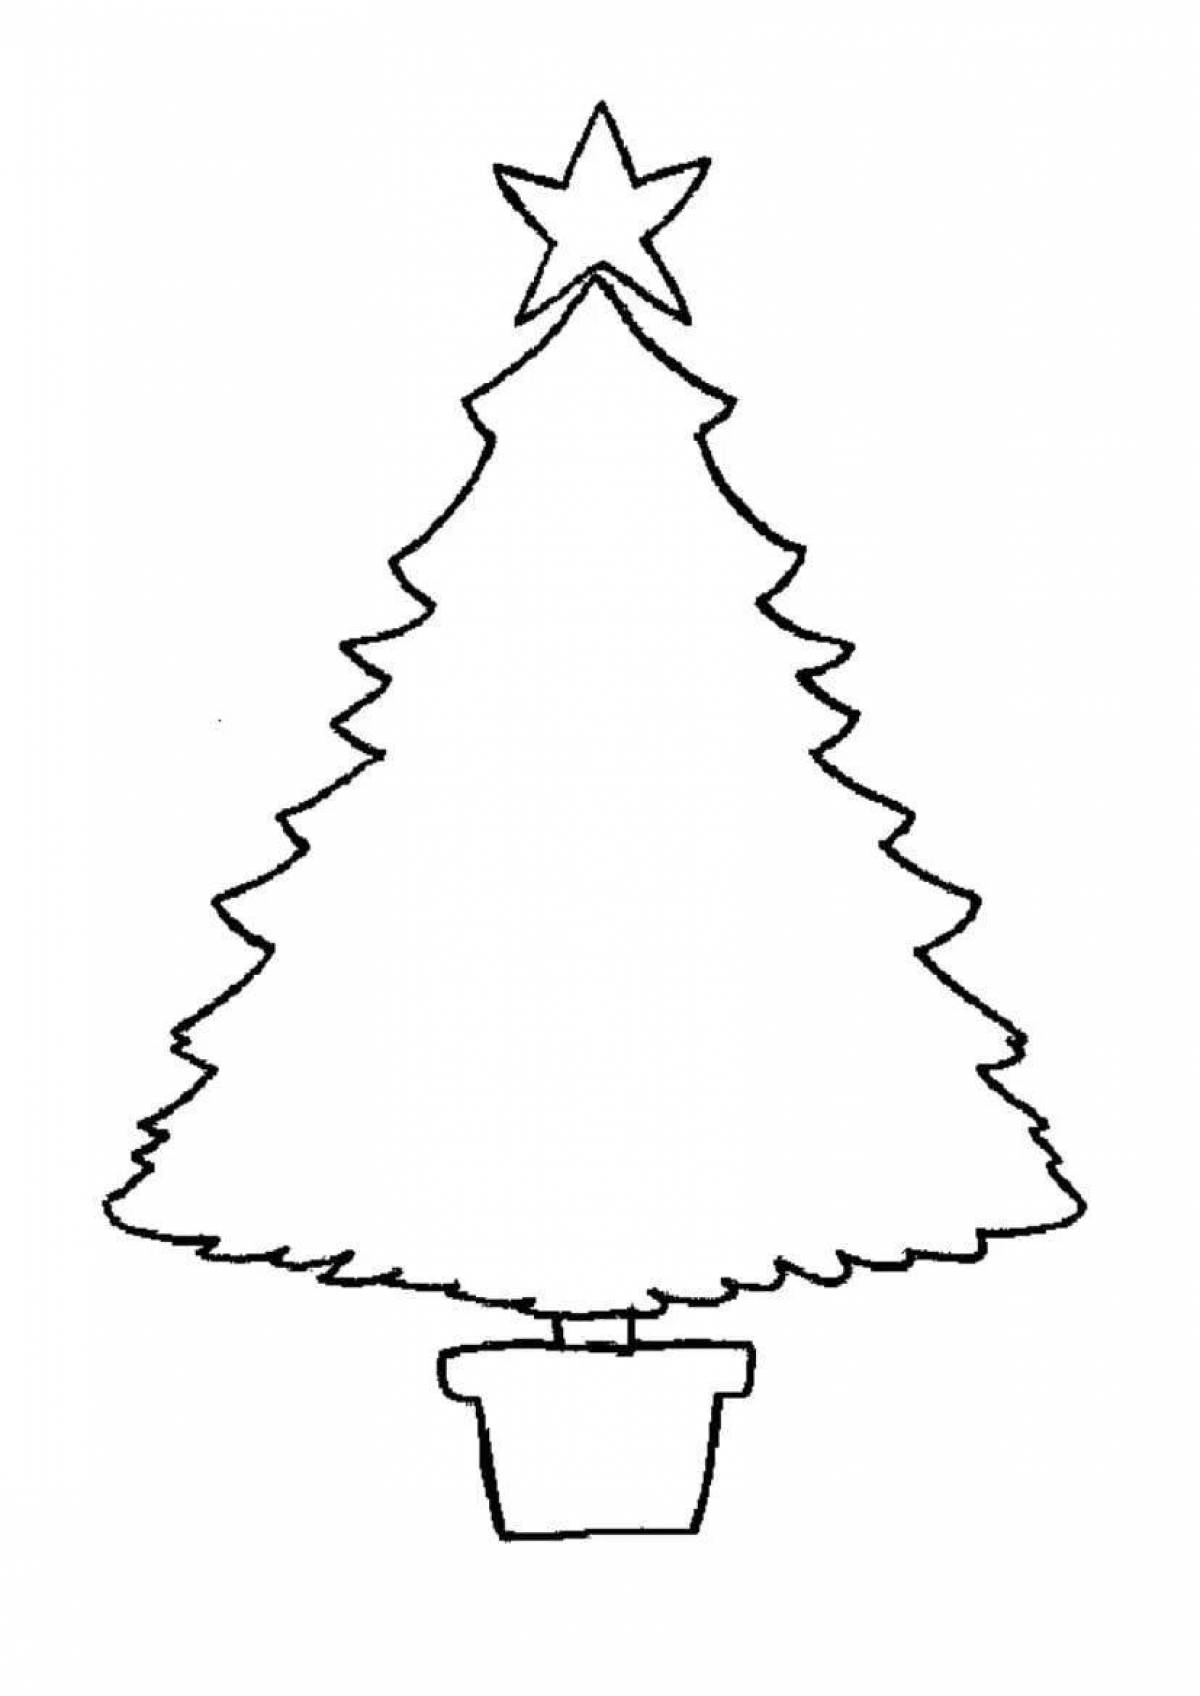 Shiny Christmas tree pattern